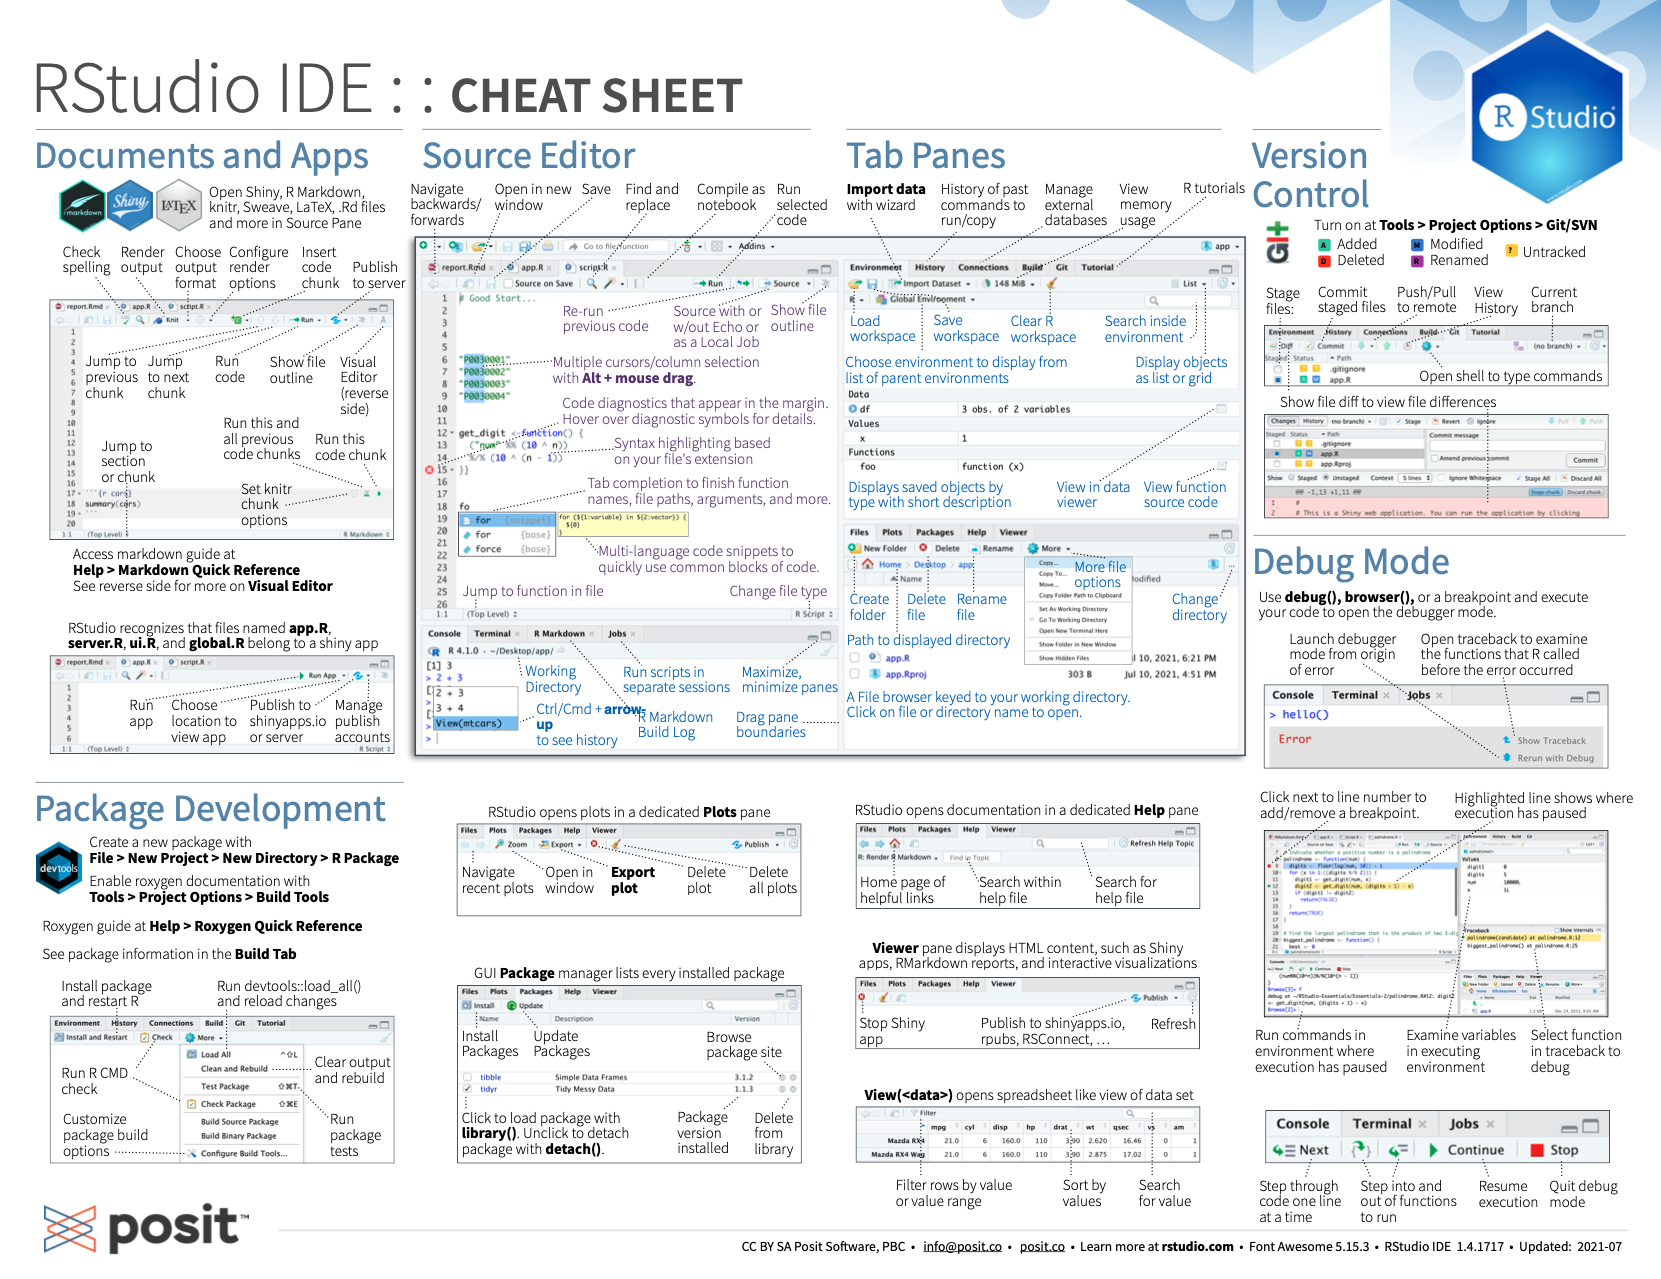 RStudio cheat sheet (from RStudio Cheat Sheets).